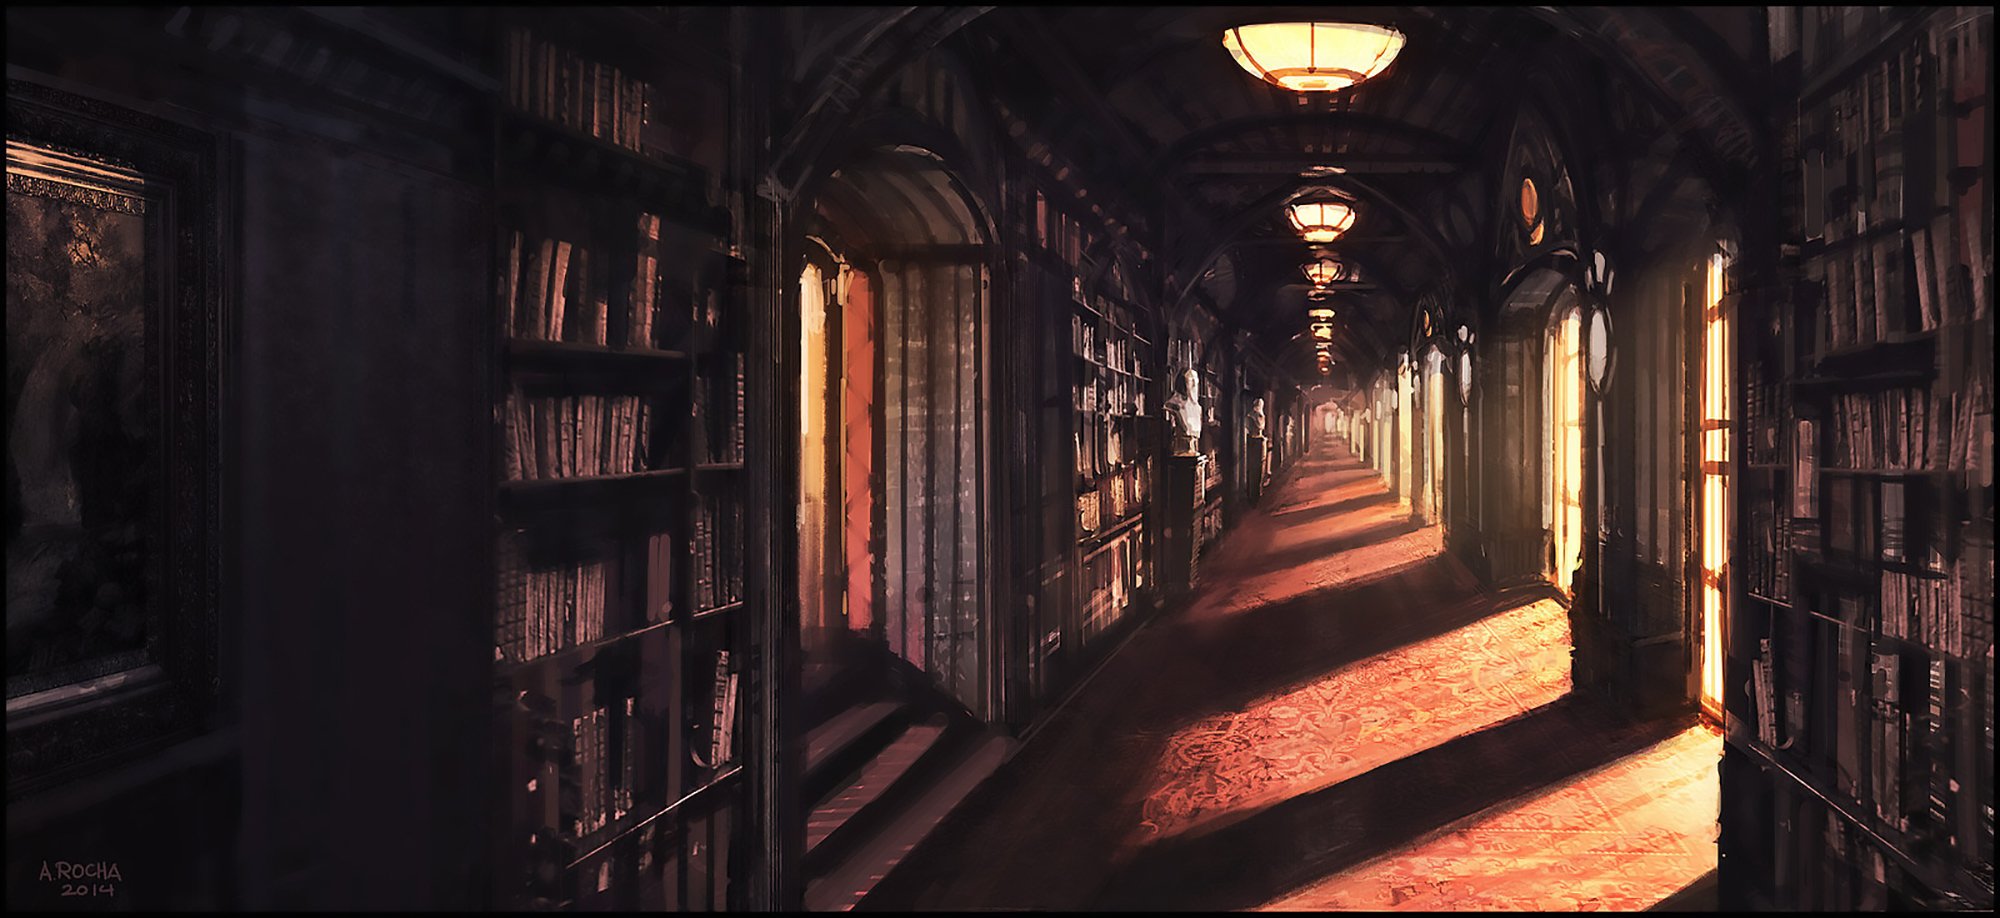 magic library wallpaper